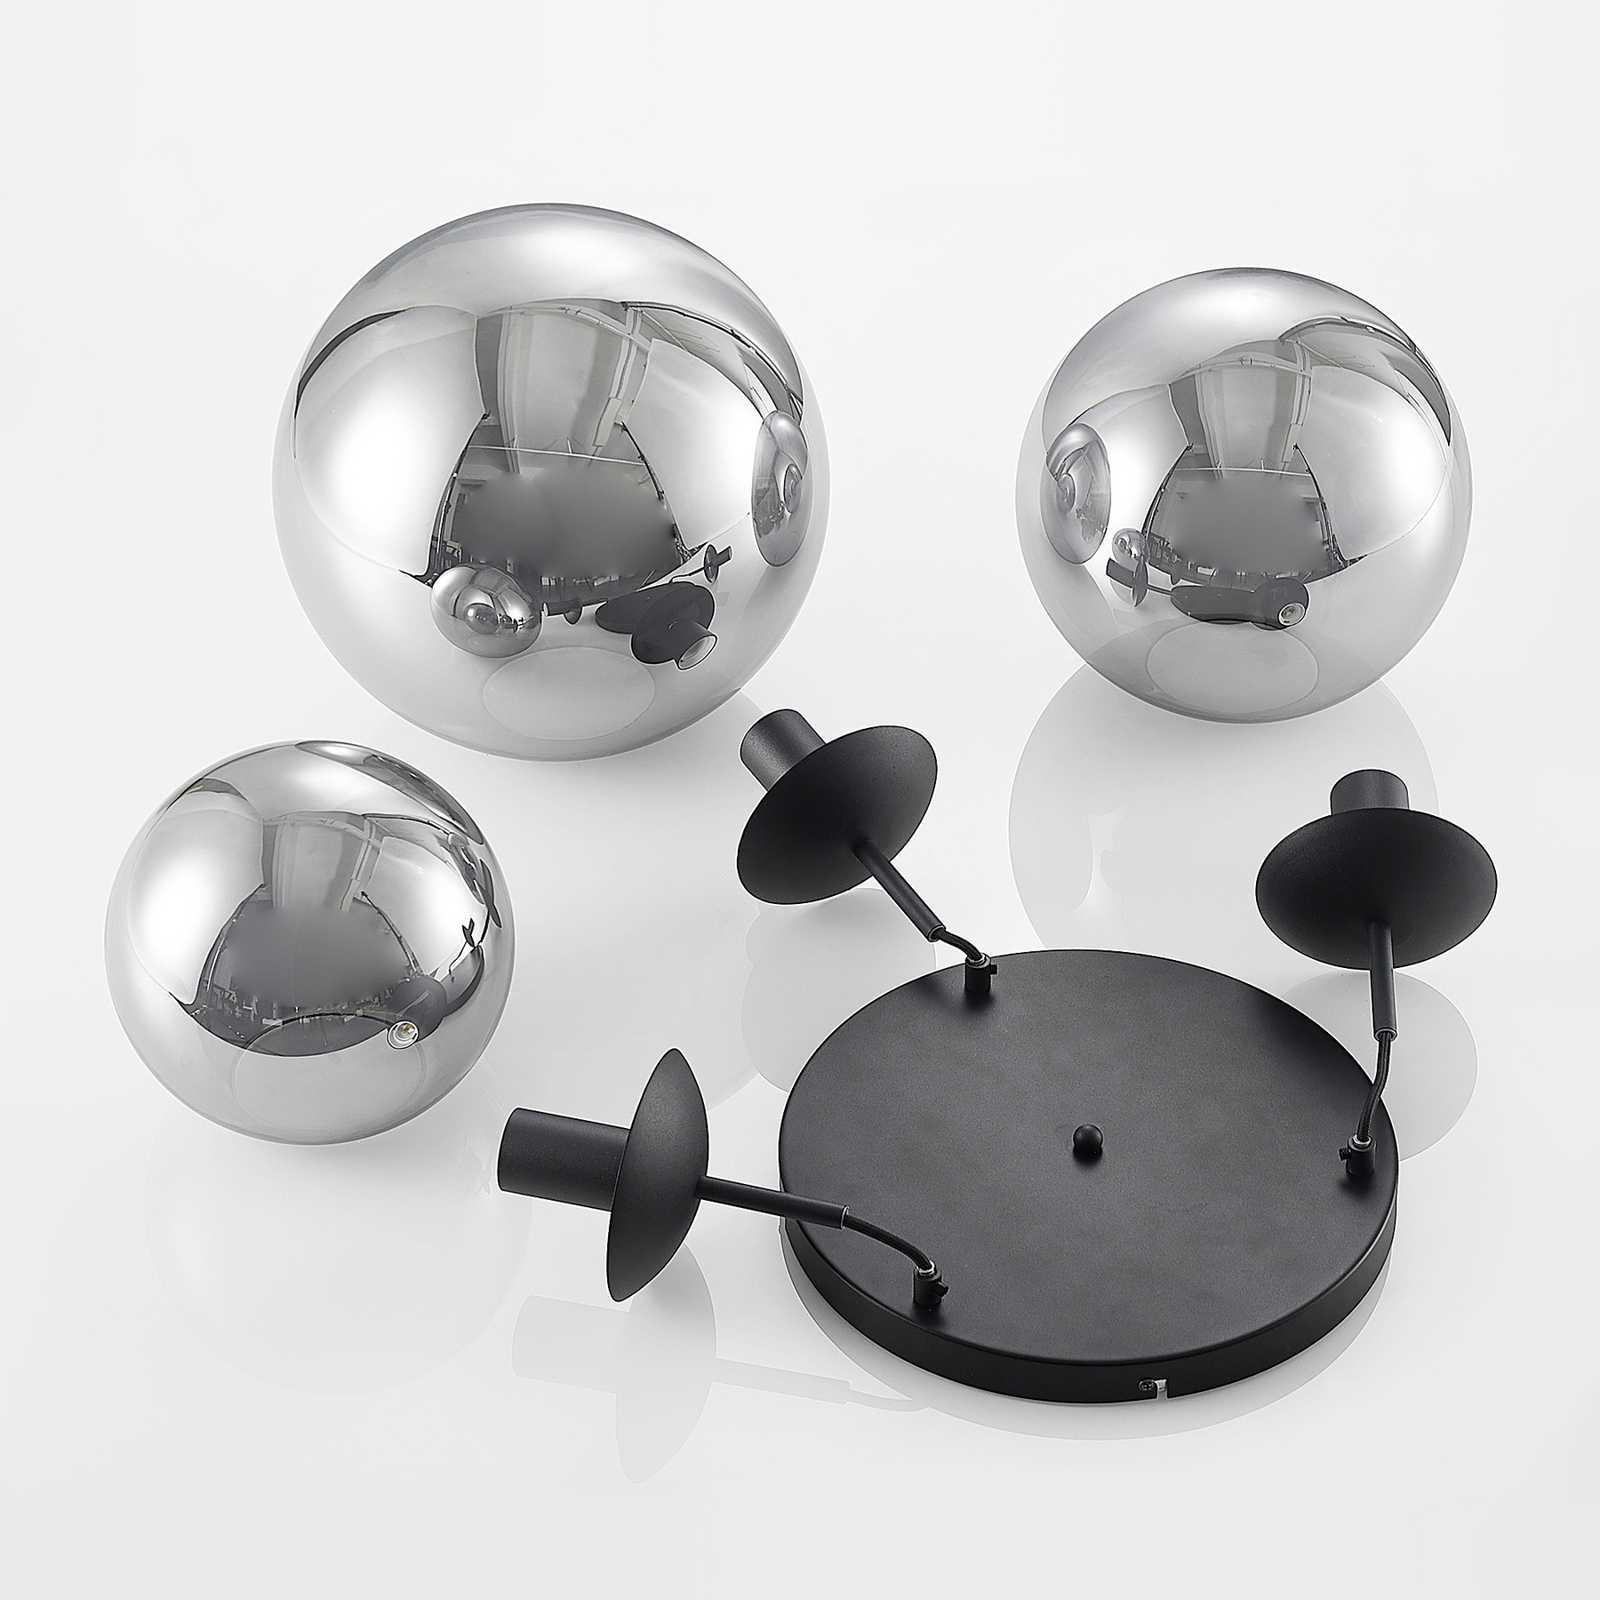 Lindby Teeja suspension 3 sphères verre gris fumée